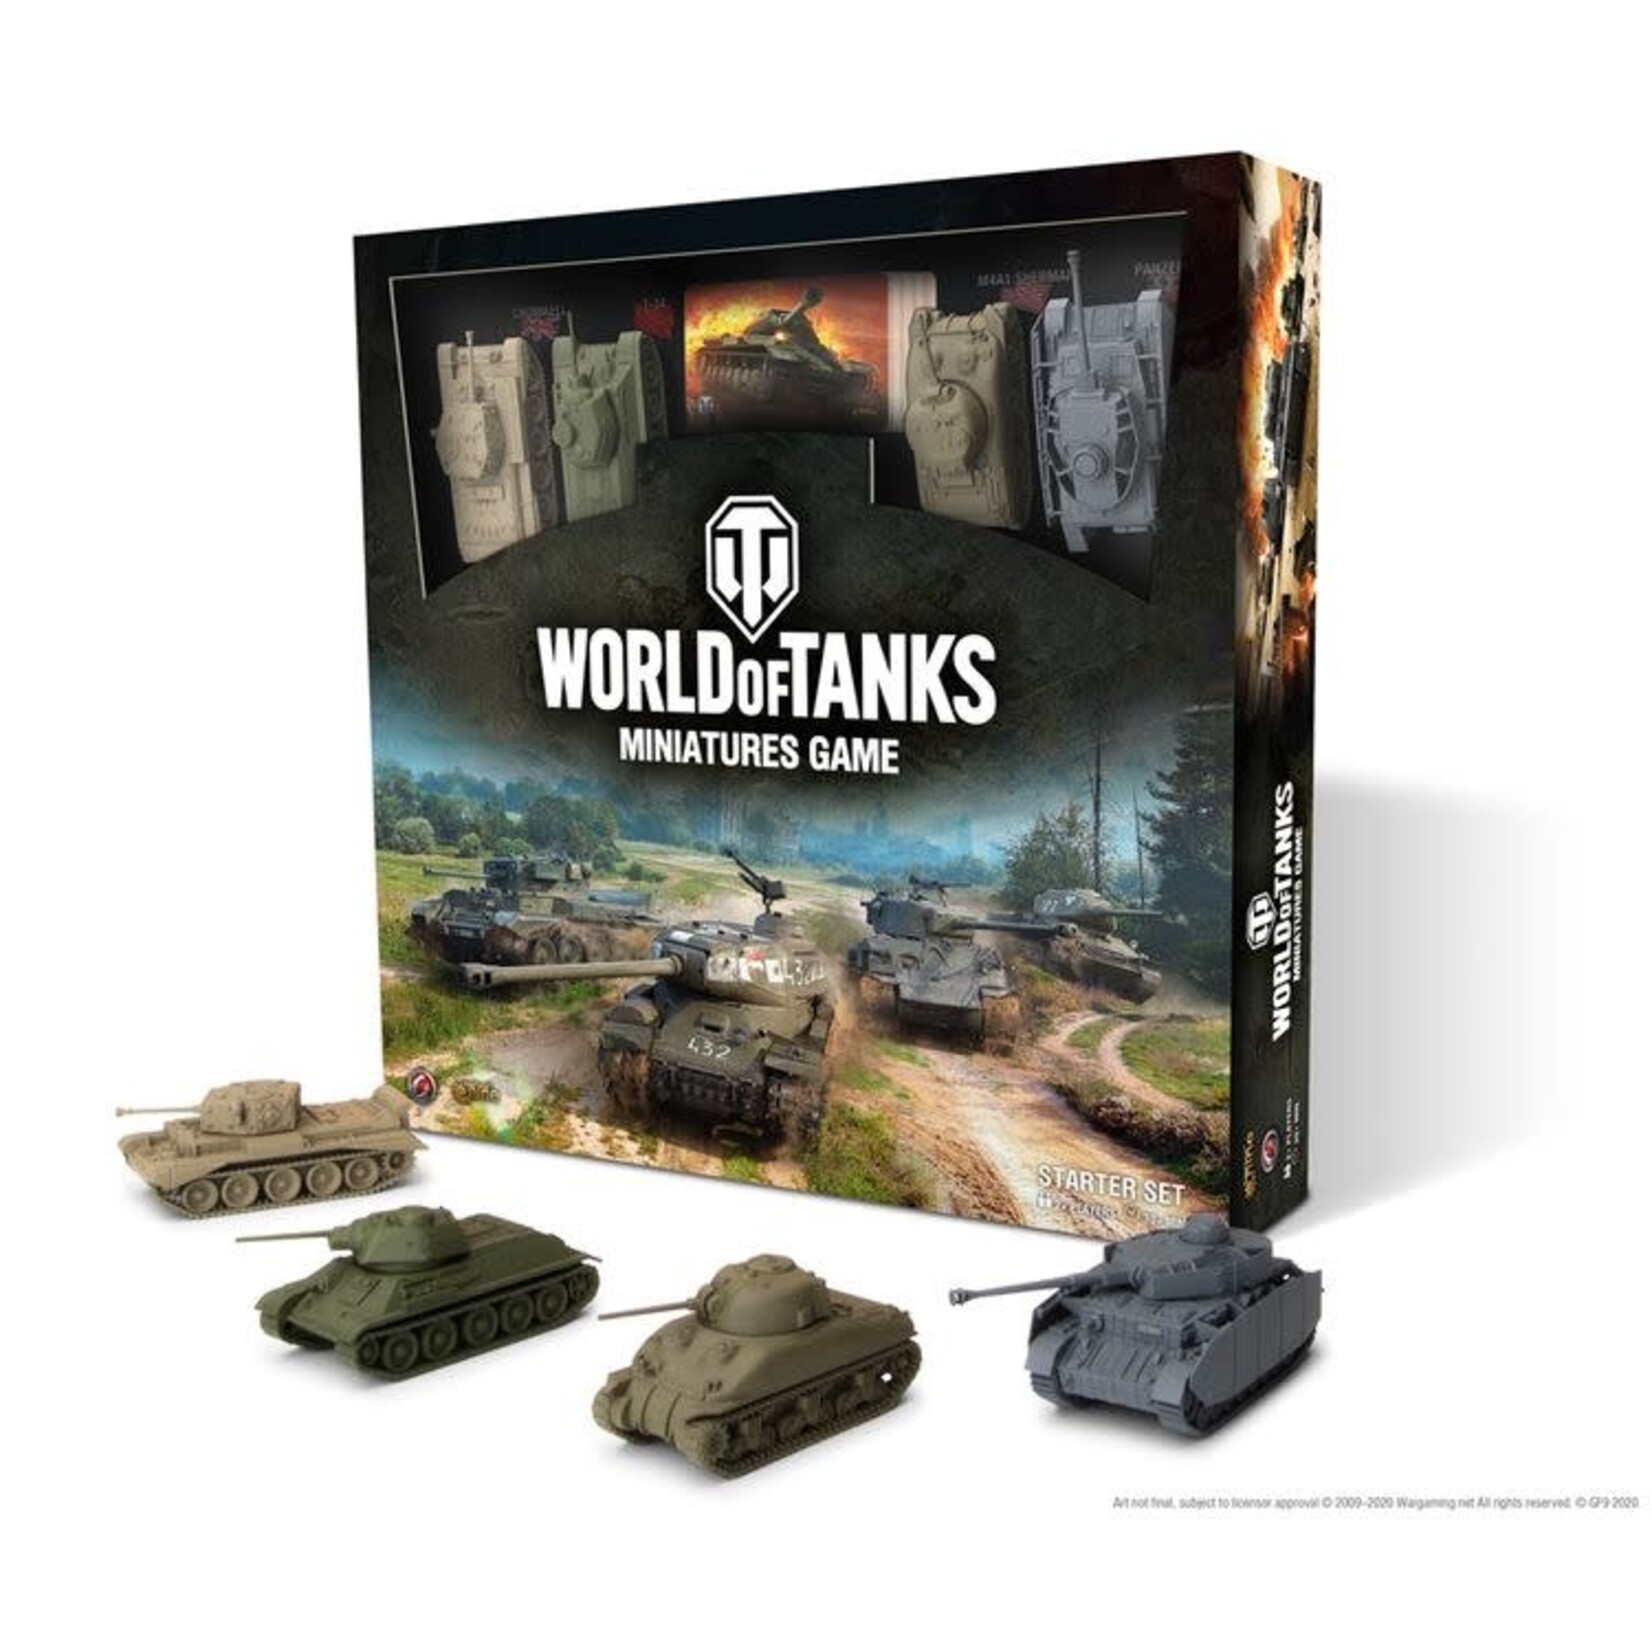 Battlefront Miniatures World of Tanks Miniature Game